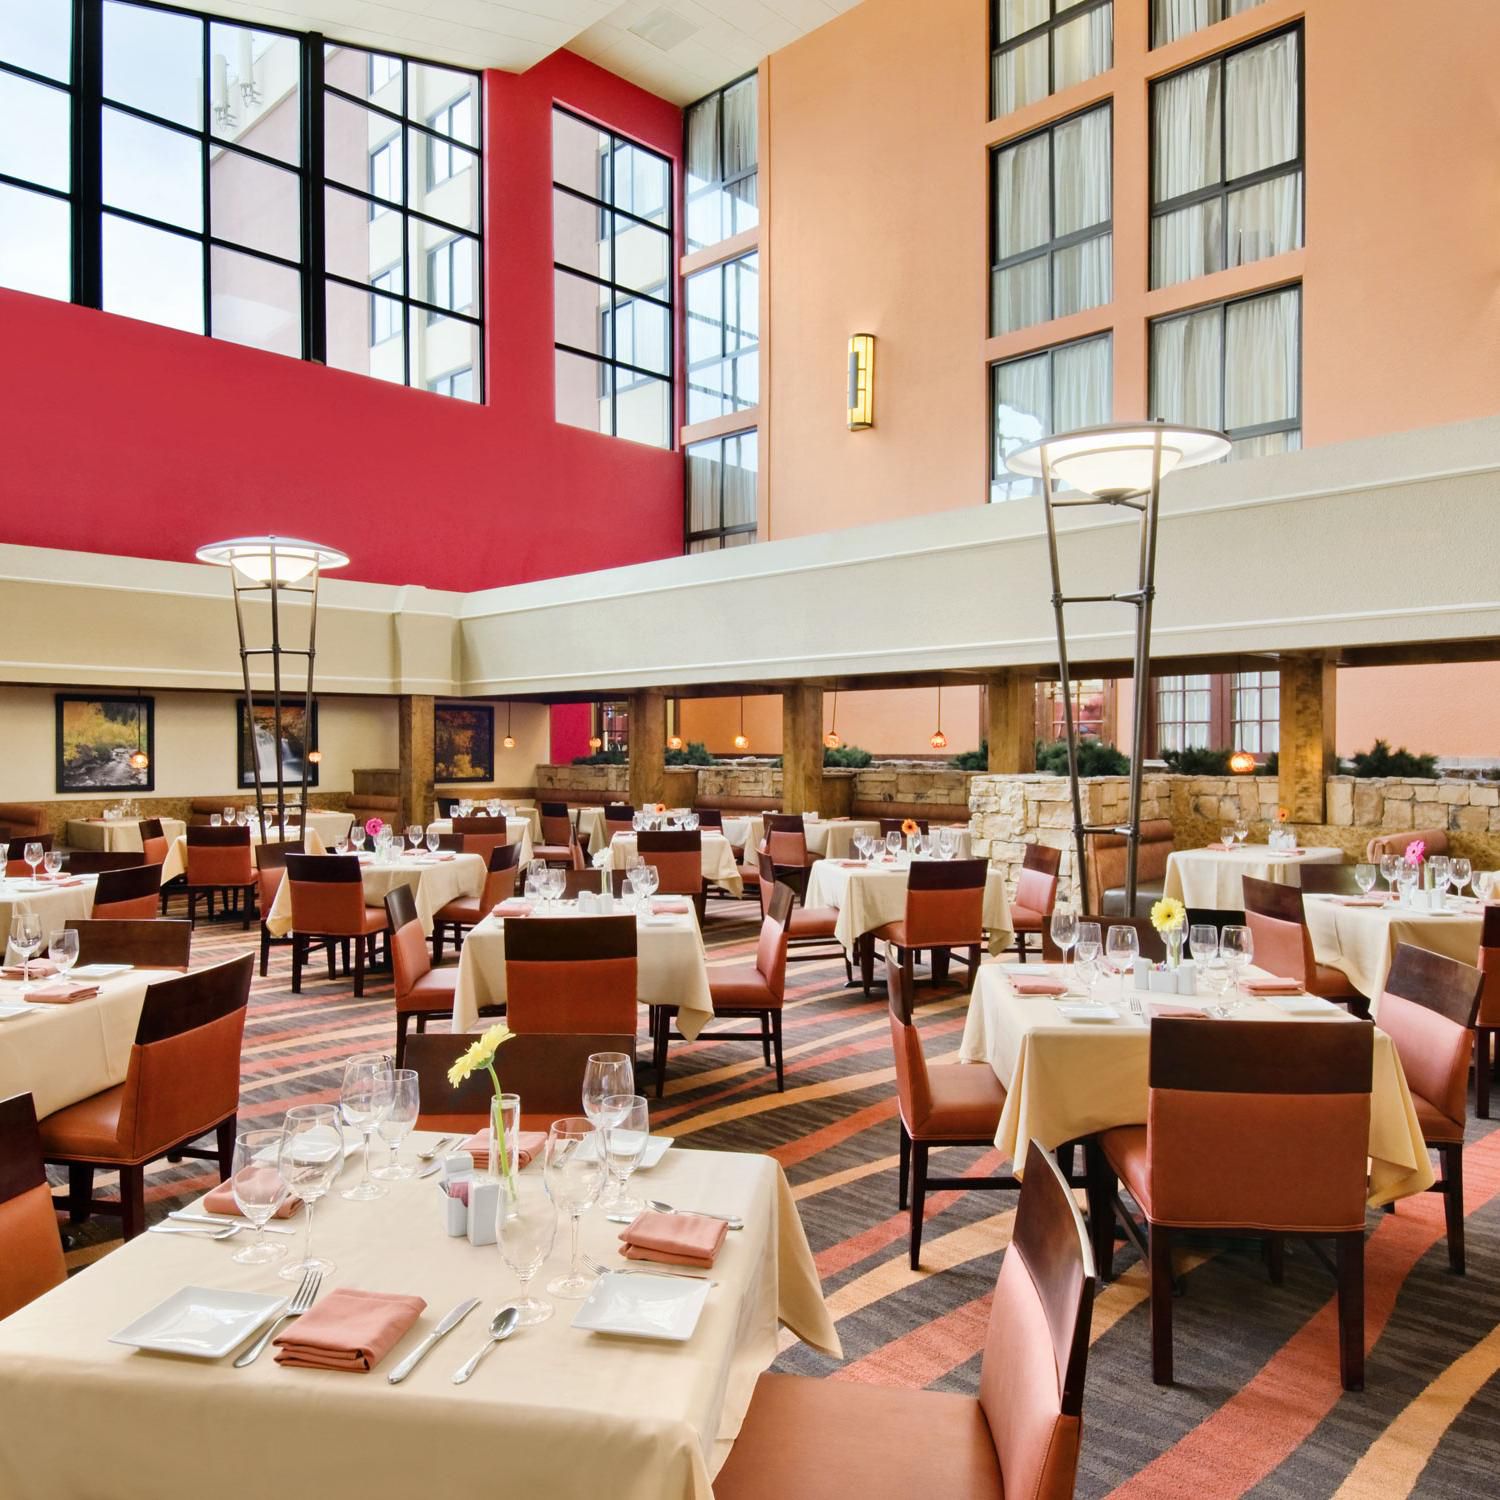 Enjoy fine dining or lighter meals at the Terrace Restaurant